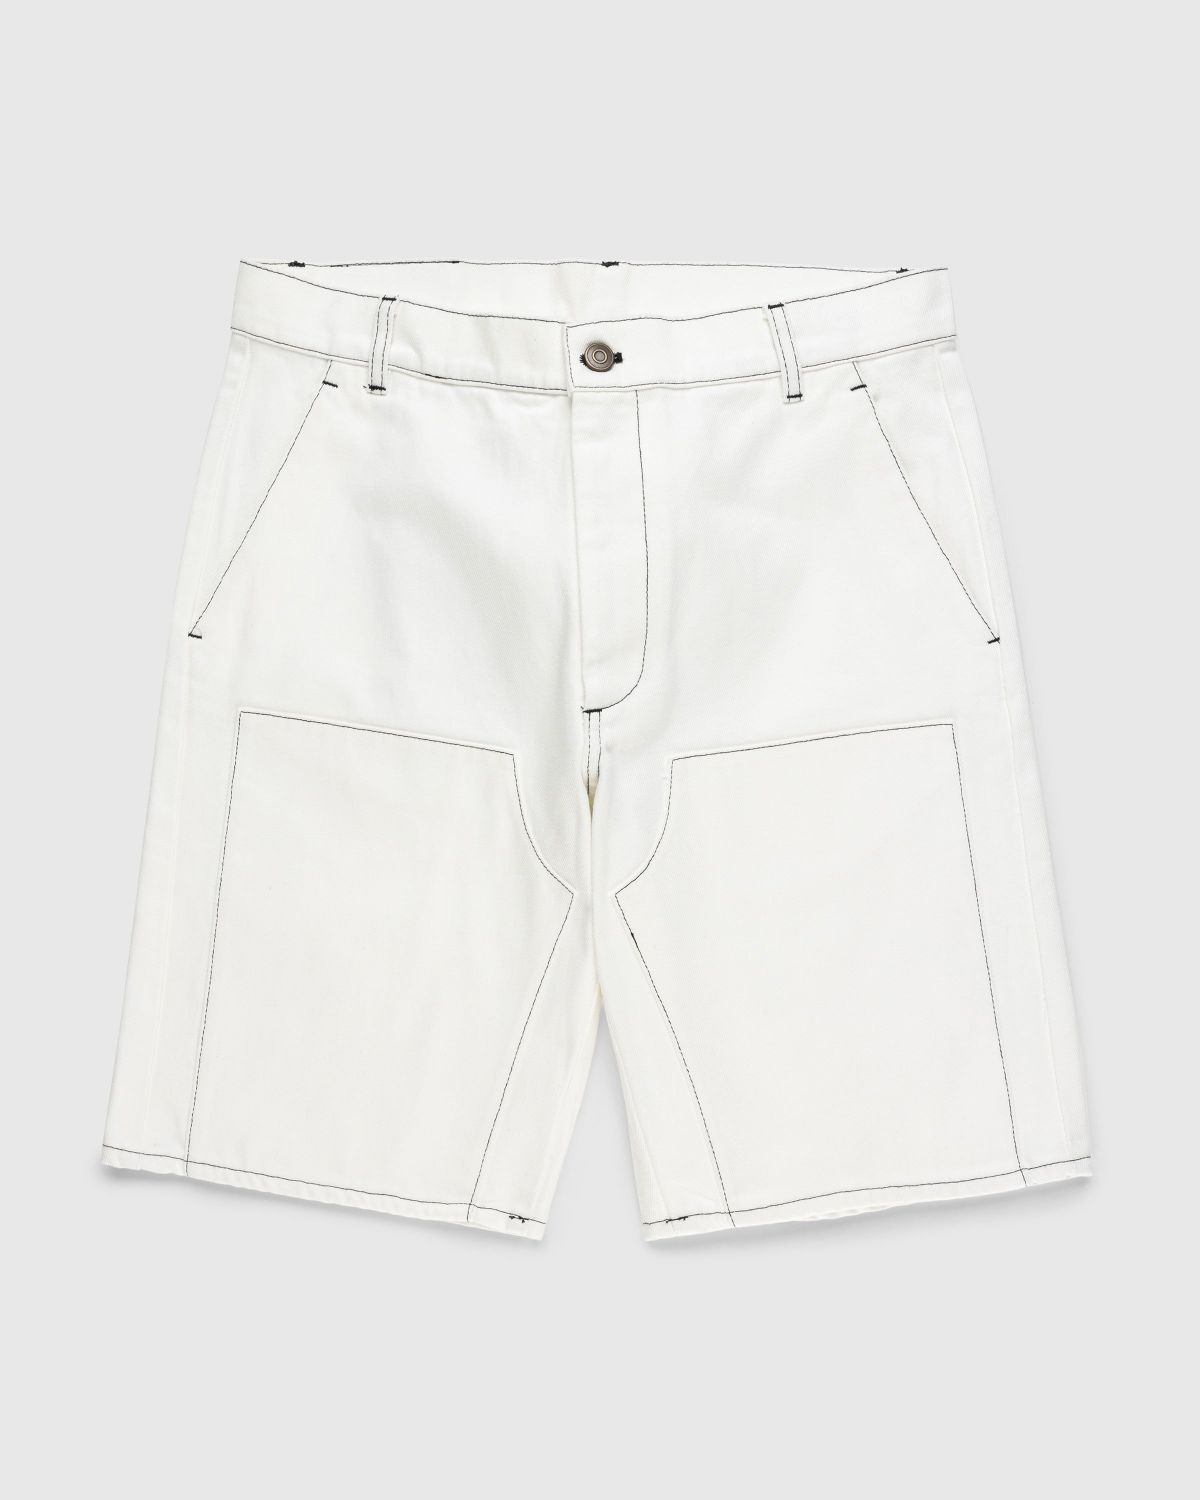 Winnie New York – Denim Shorts Ivory - Shorts - Beige - Image 1